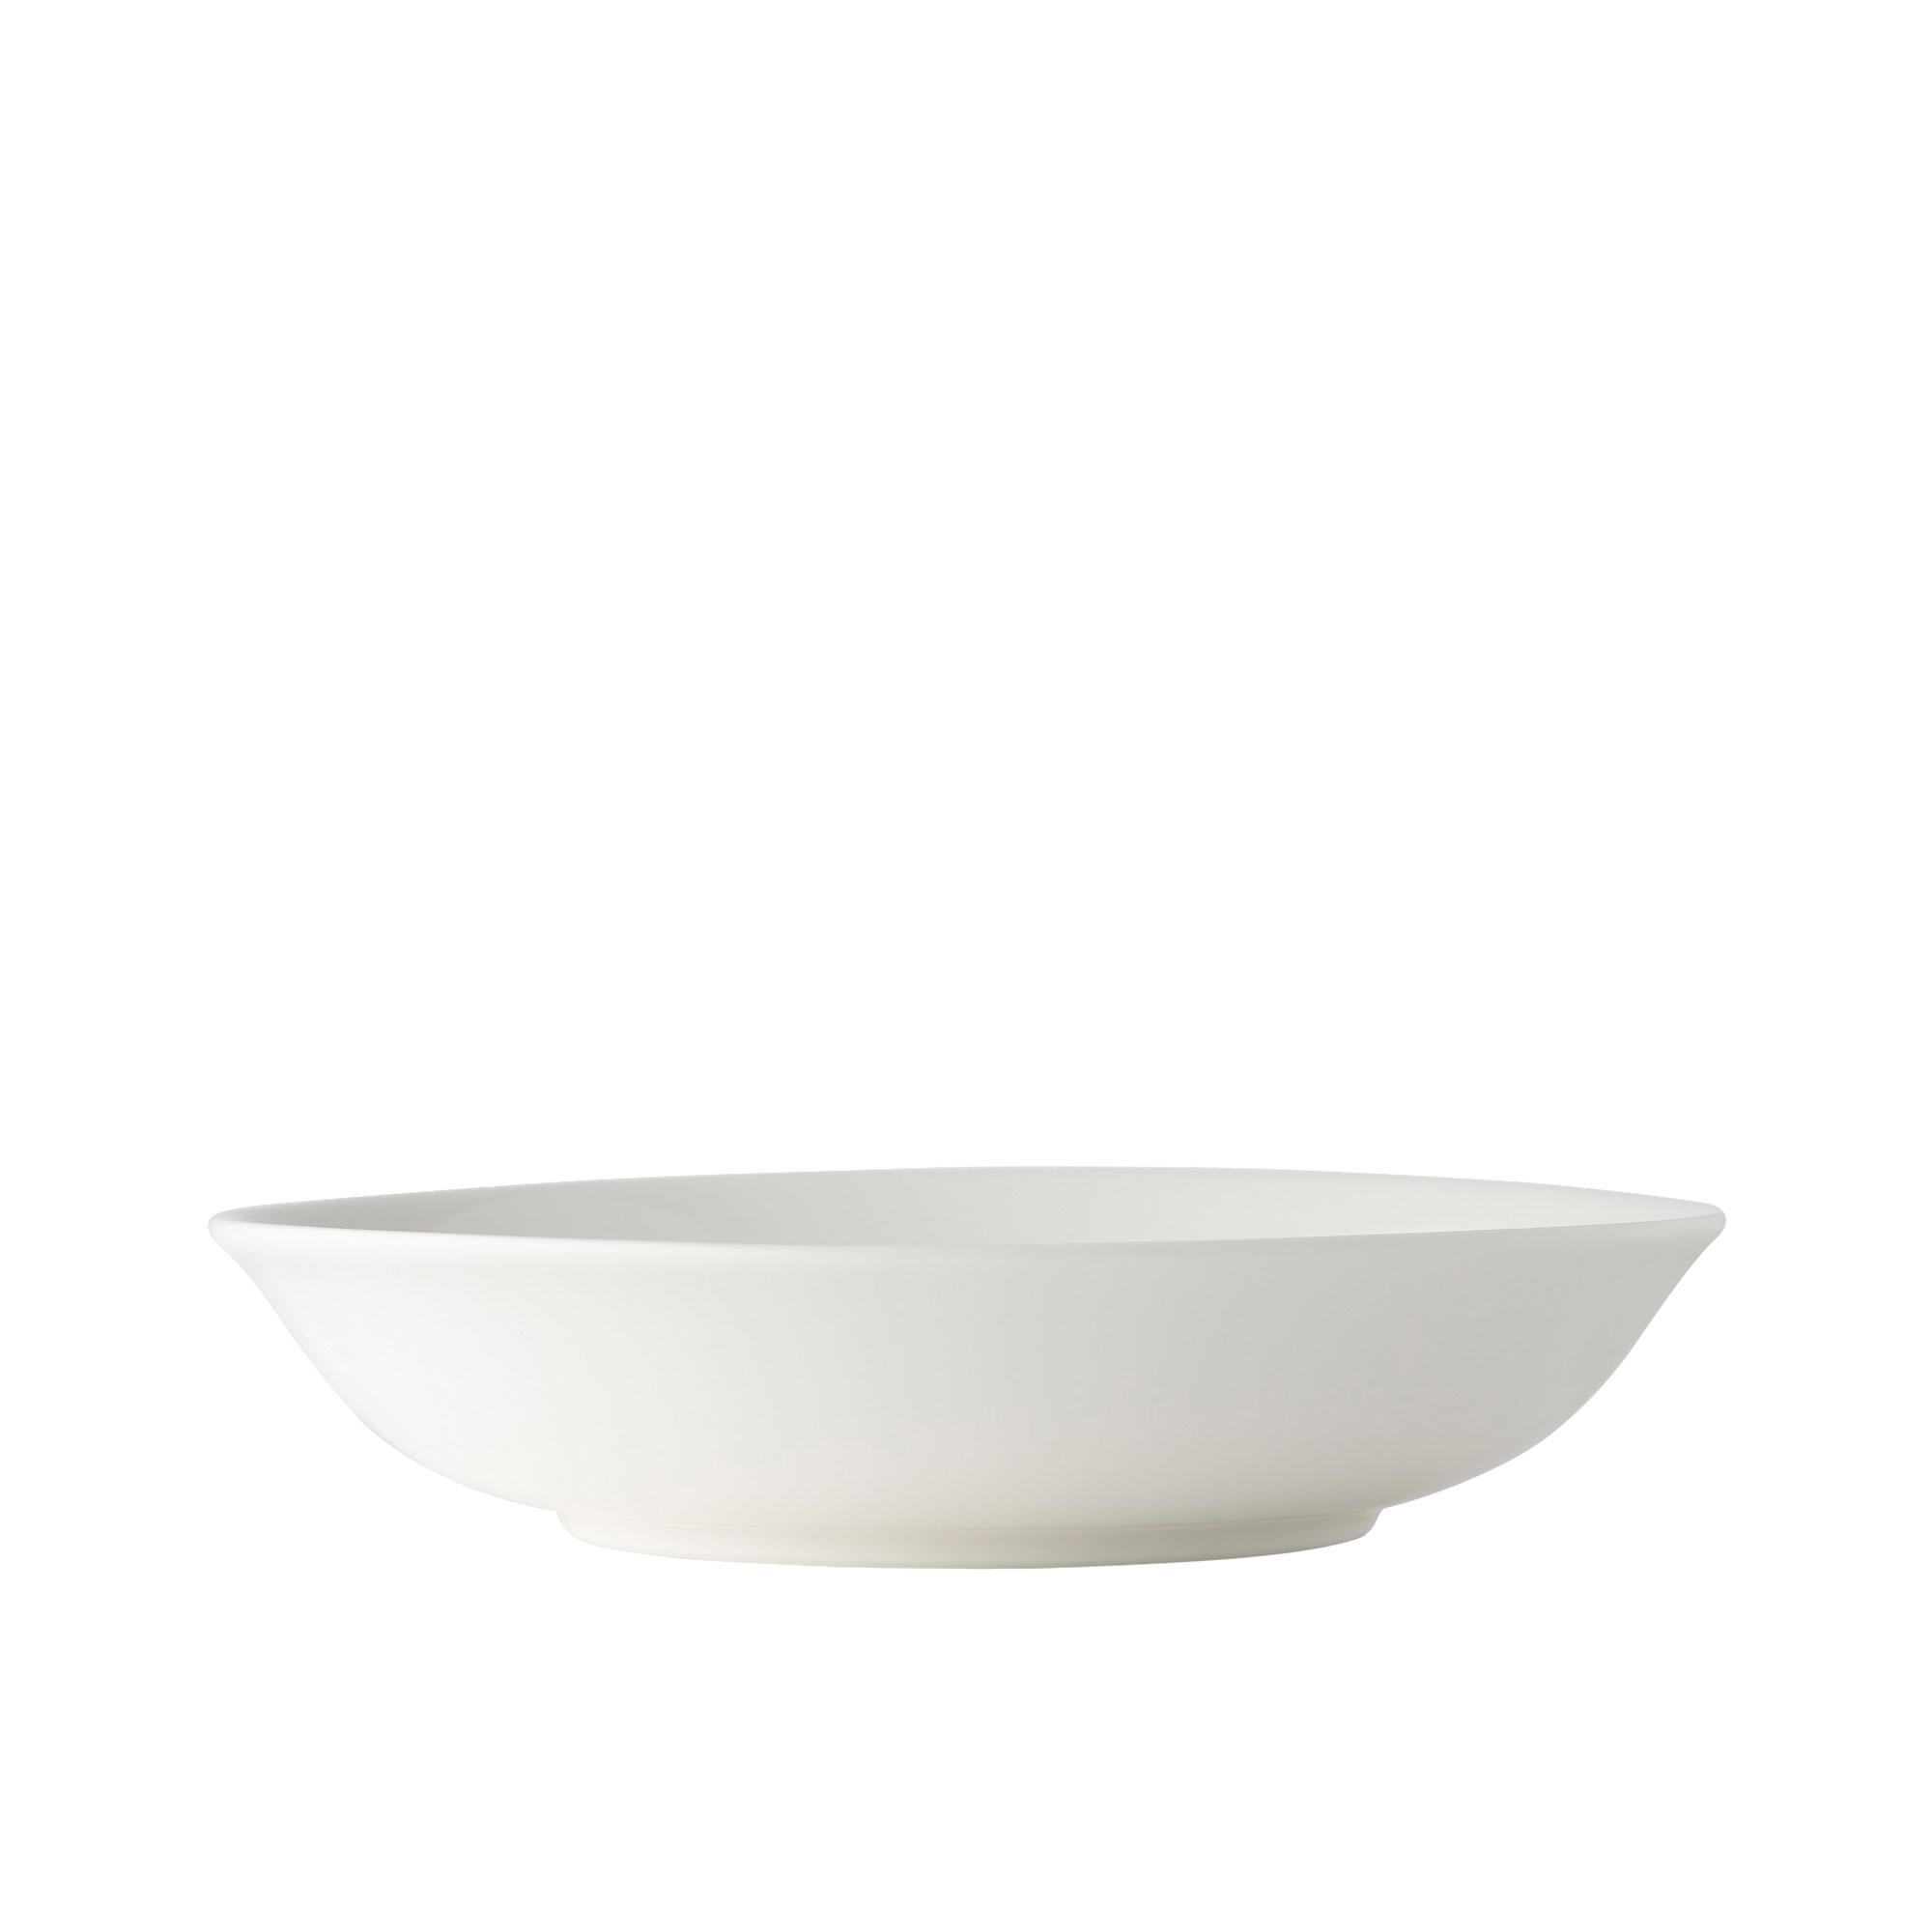 Noritake Everyday by Adam Liaw Pasta Bowl Set of 4 White Image 6